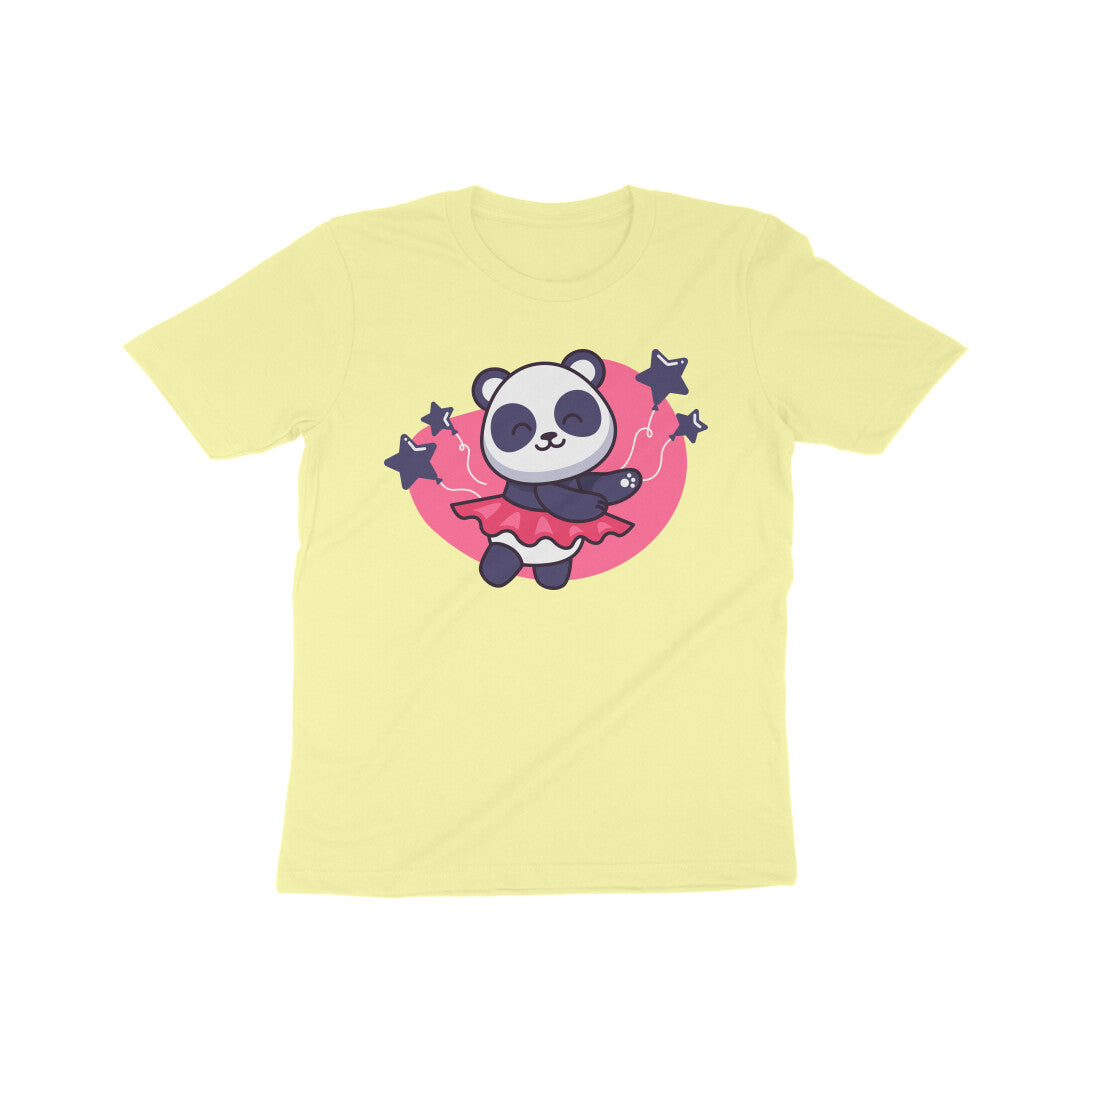 Birthday Party Panda Kids T-Shirt